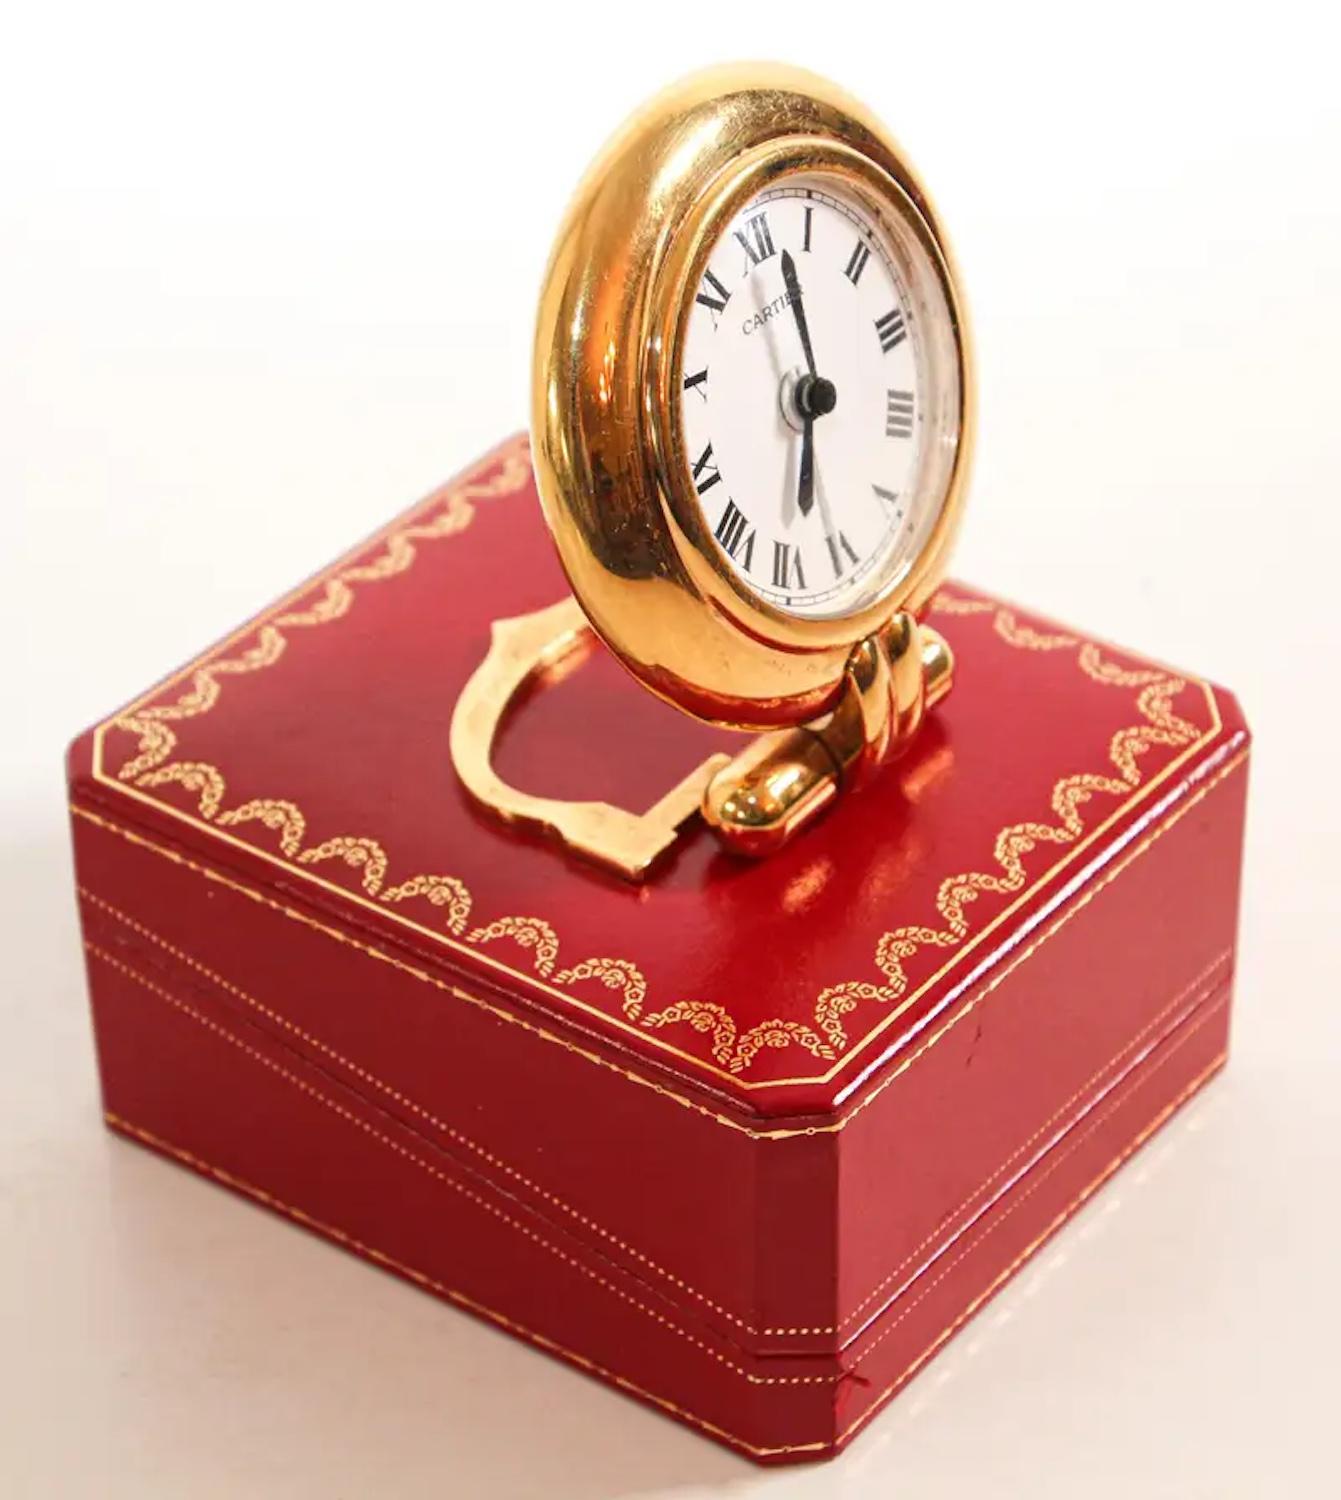 Cartier Colisee Art Deco Travel Desk Clock 24-Karat Gold-Plated 12